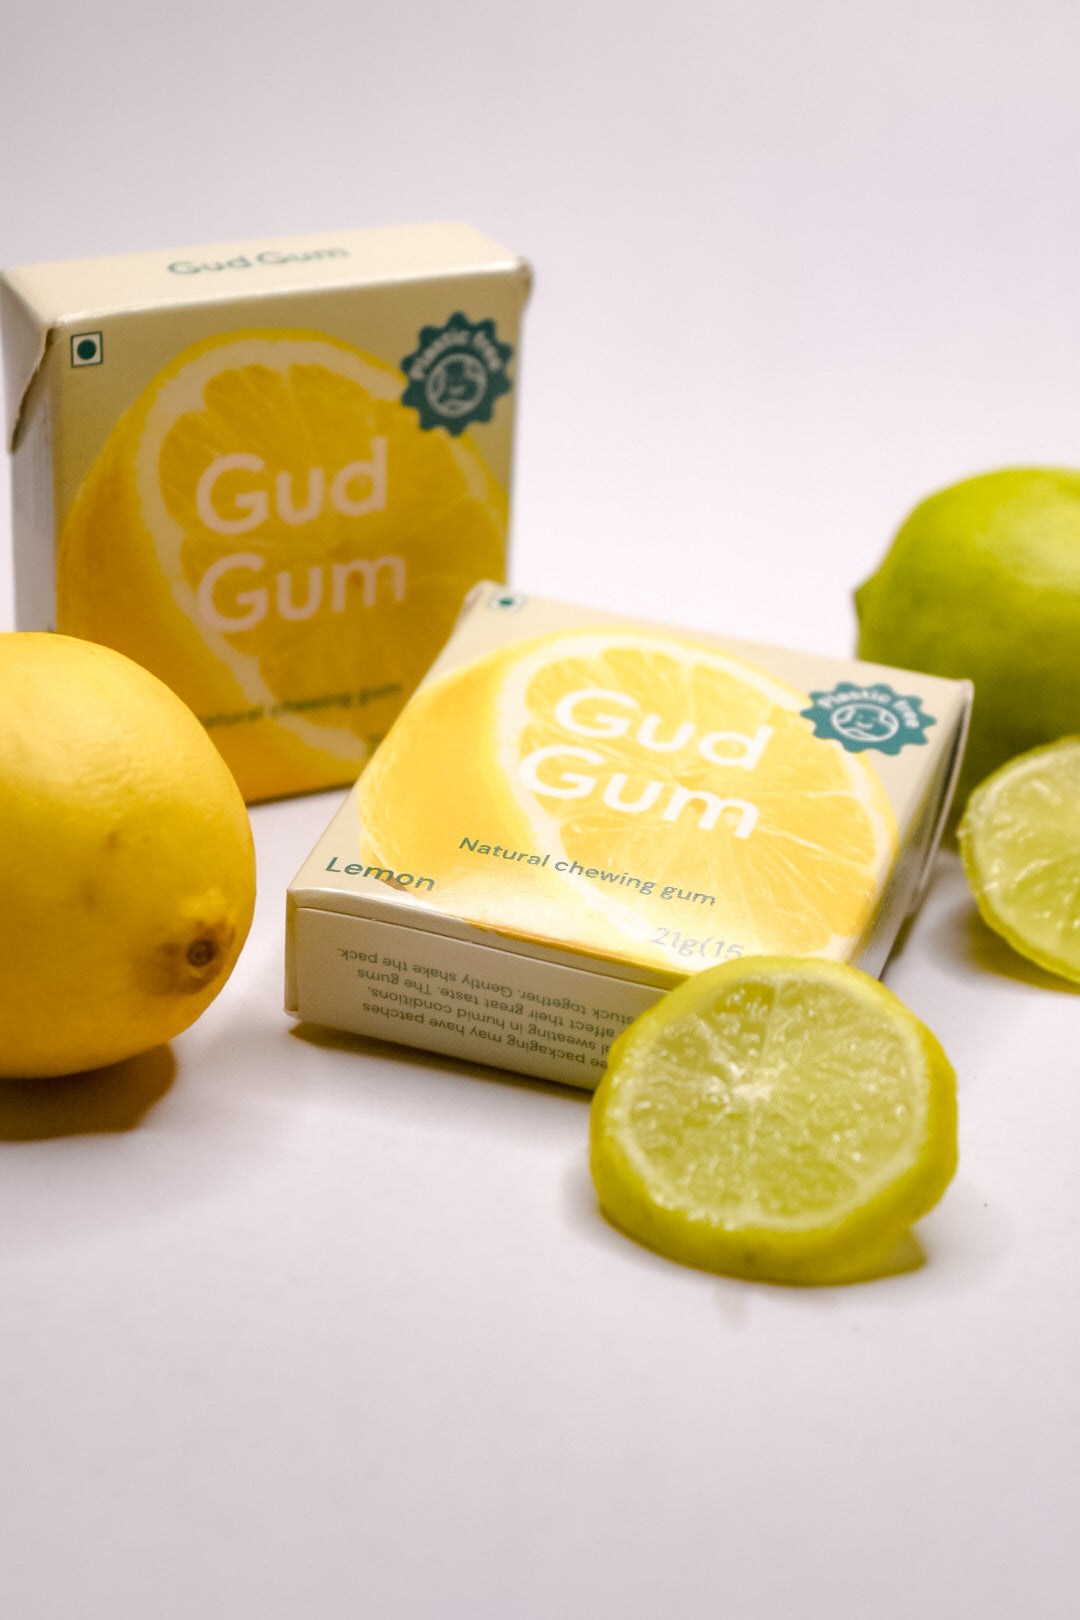 Gud Gum Lemon Chewing Gum - Pack of 4